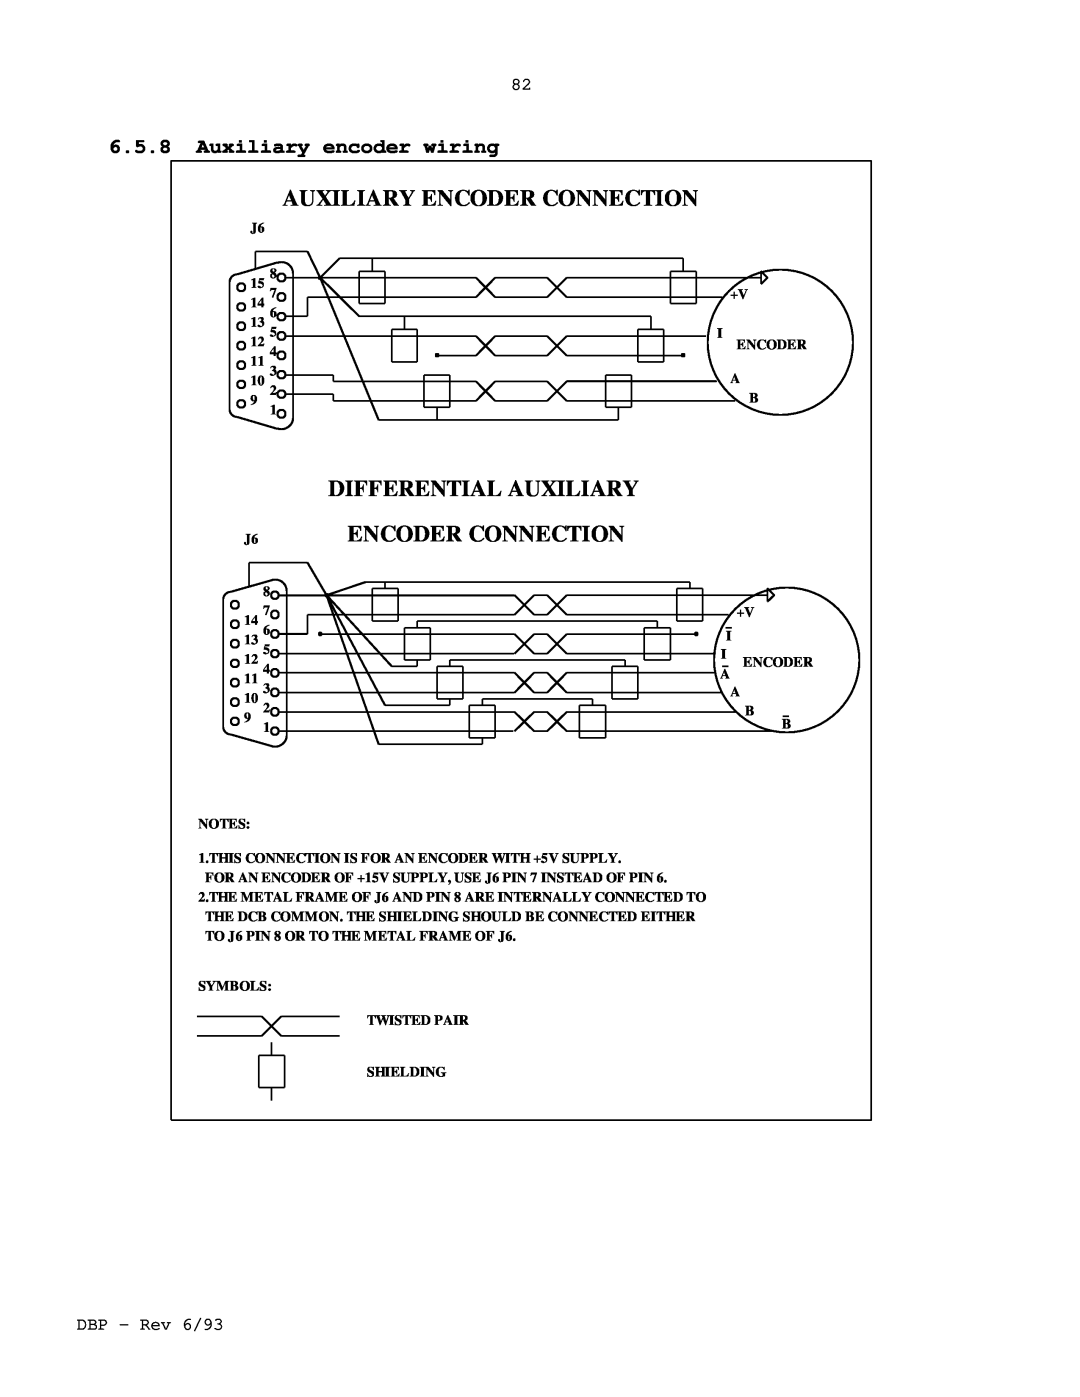 Elmo DBP SERIES manual Auxiliary Encoder Connection, Differential Auxiliary, 6.5.8Auxiliary encoder wiring 